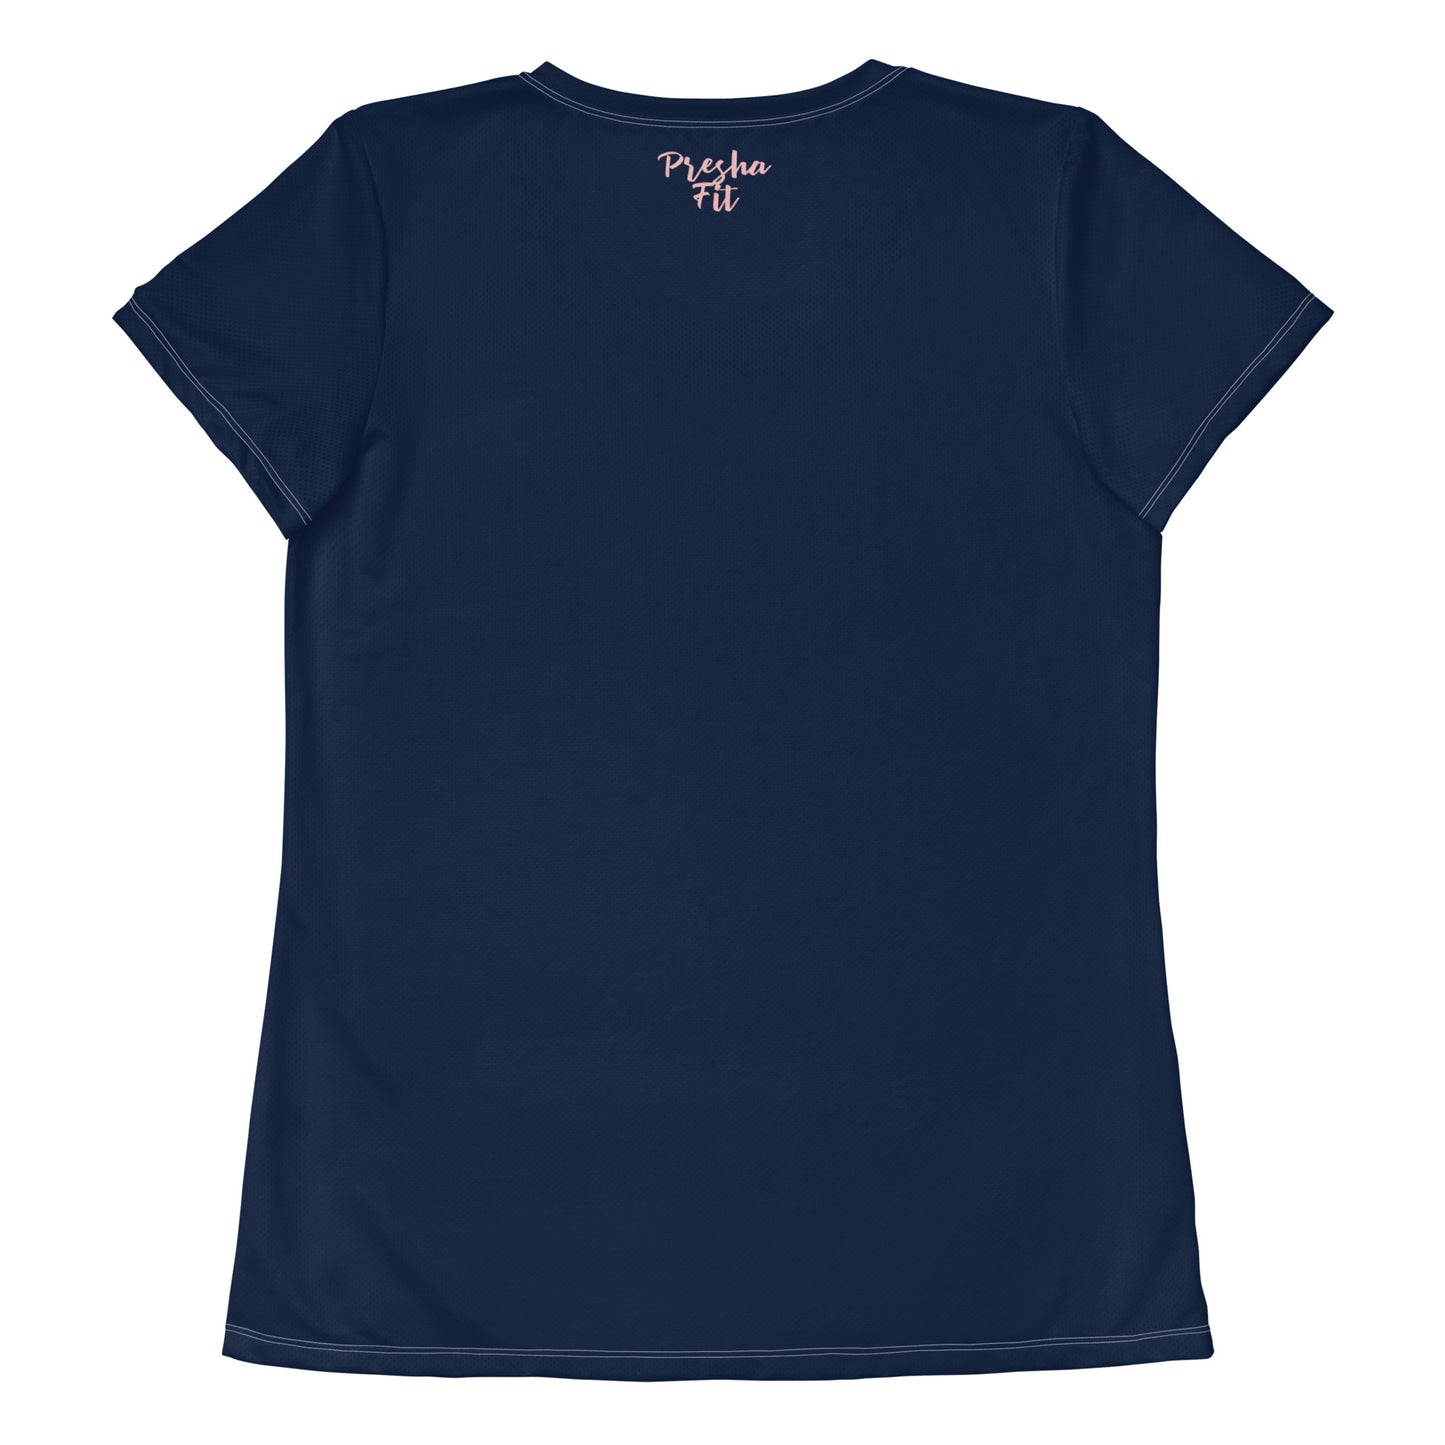 Presha Fit Women's Athletic T-Shirt